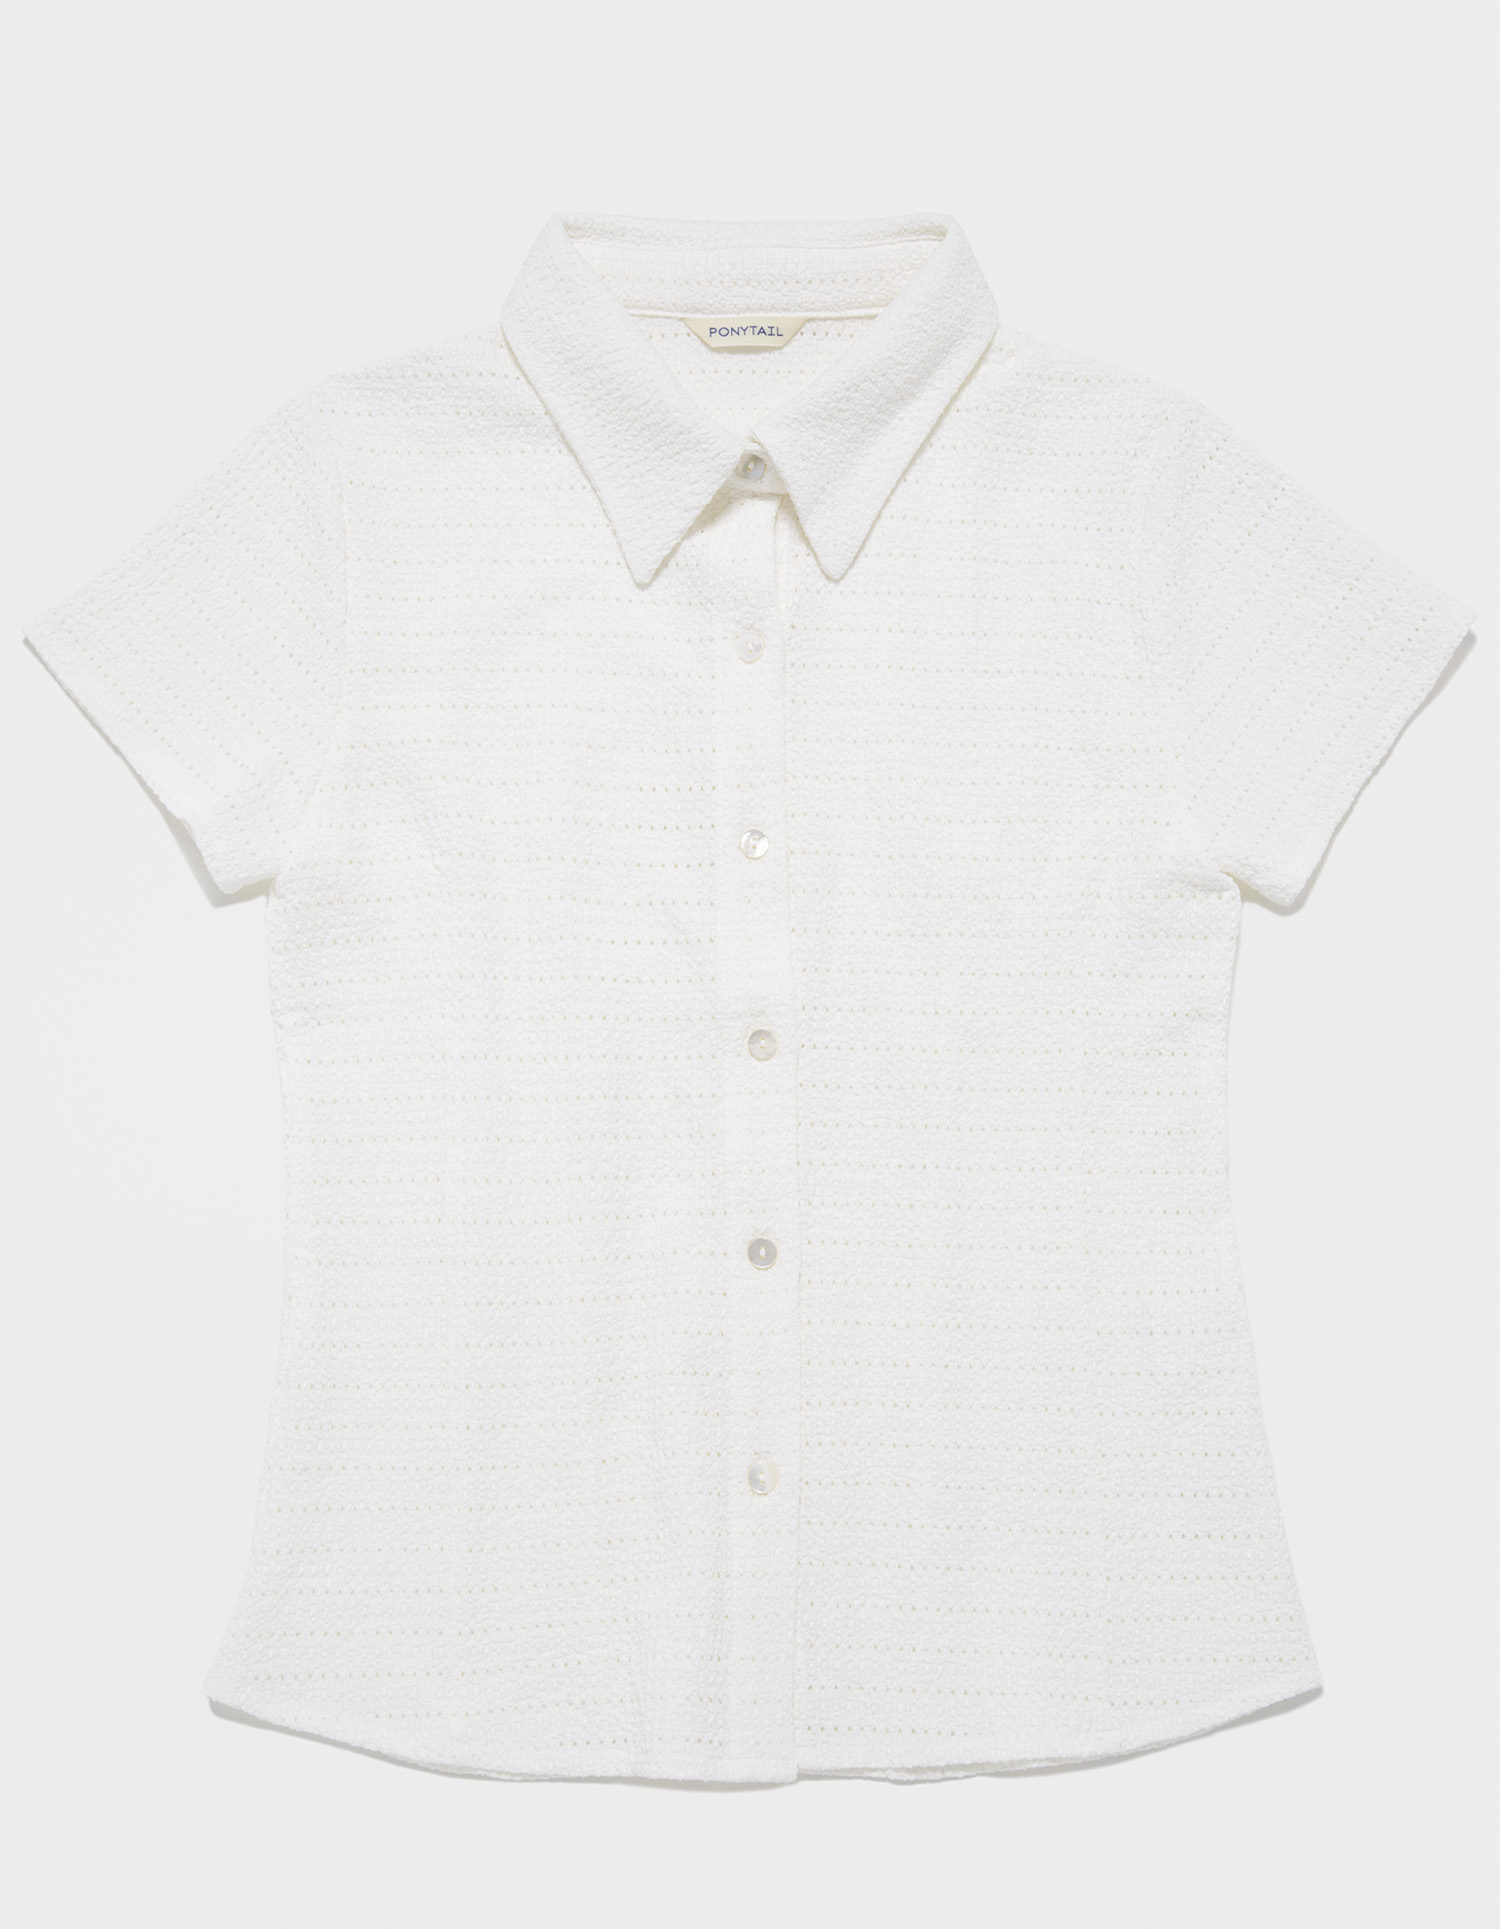 Suez Slim-fit Summer Shirts (Ice White) - 포니테일